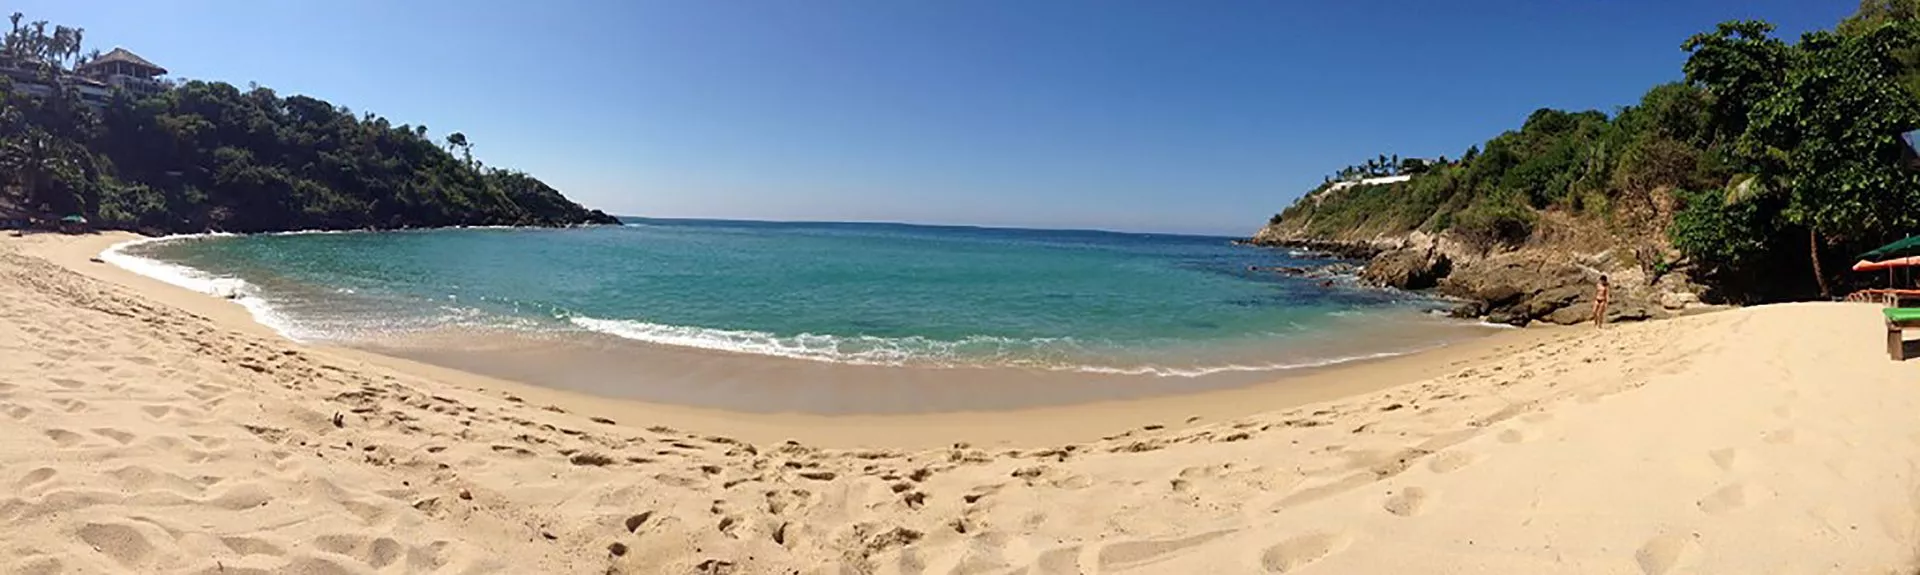 Carrizalillo Beach in Mexico, North America | Surfing,Beaches - Rated 4.9